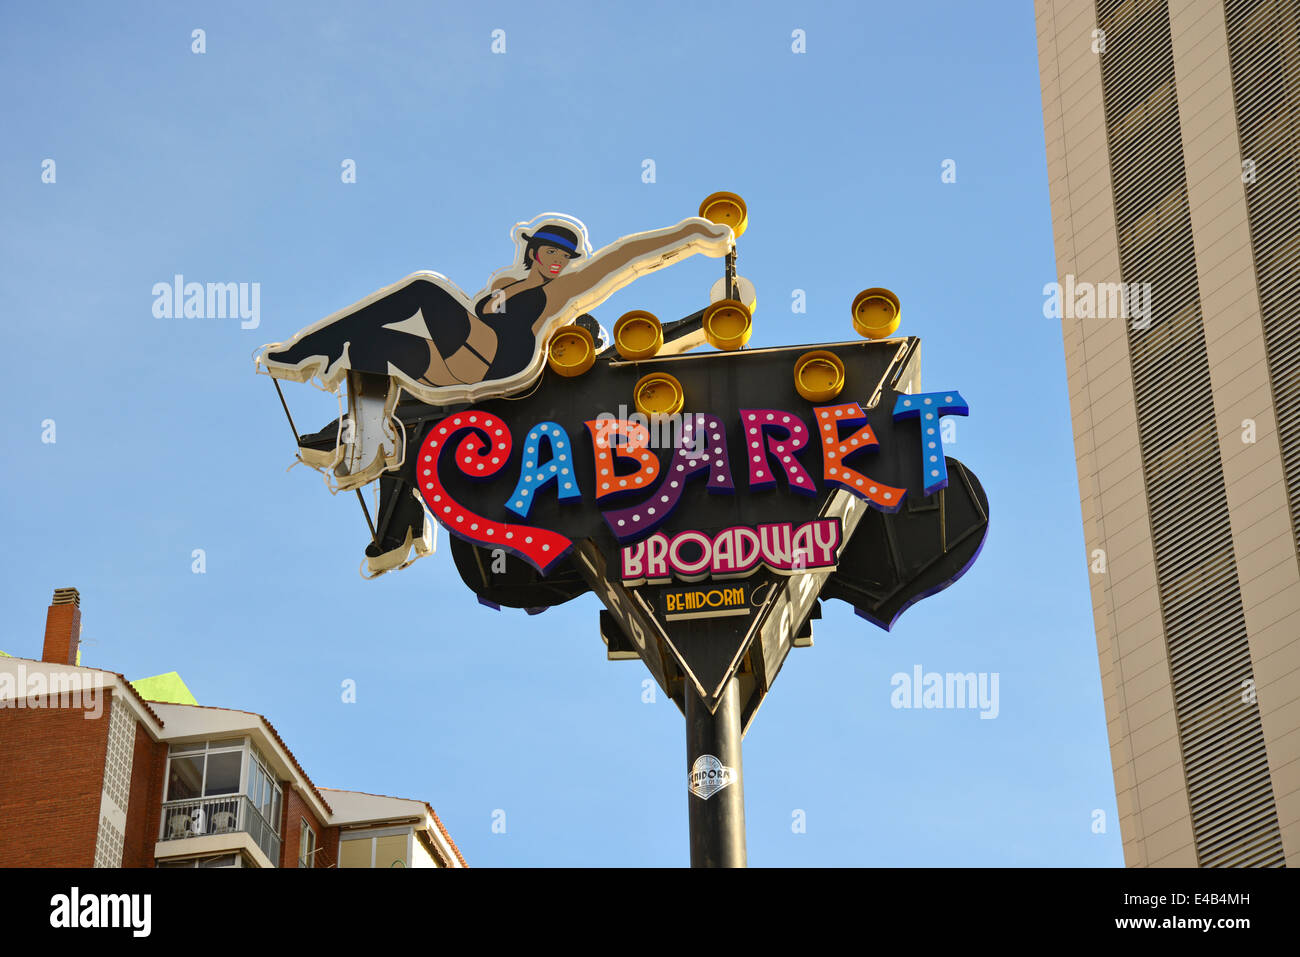 Cabaret Broadway neon sign, Calle Gerona, Benidorm, Costa Blanca, Alicante Province, Kingdom of Spain Stock Photo